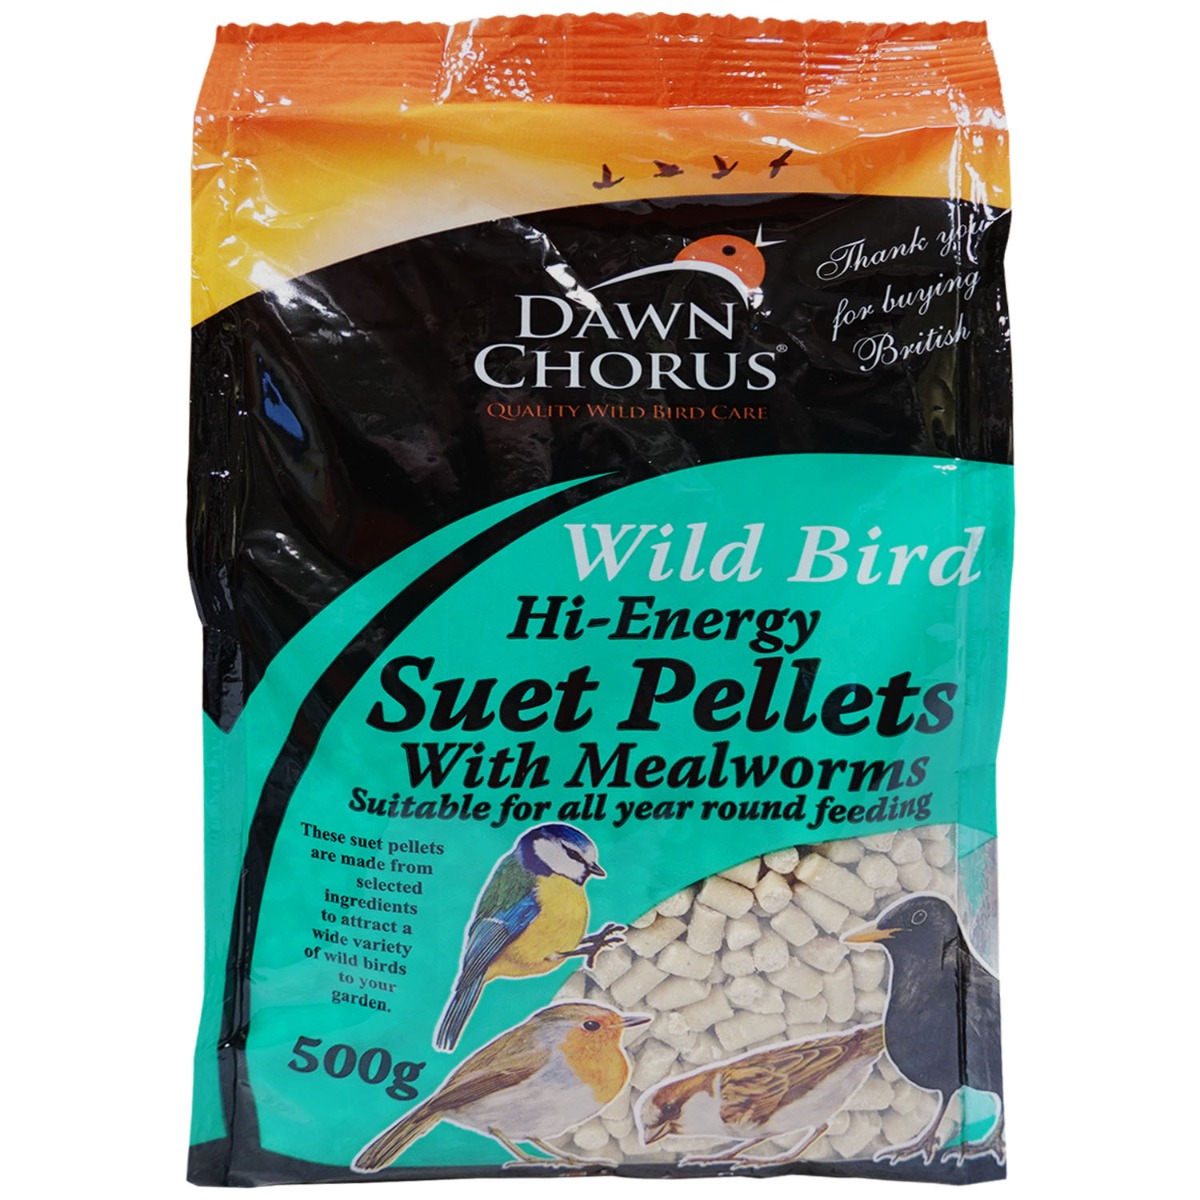 Dawn Chorus Wild Bird Hi-Energy Suet Pellets with Mealworms 500g RRP £1.59 CLEARANCE XL 99p